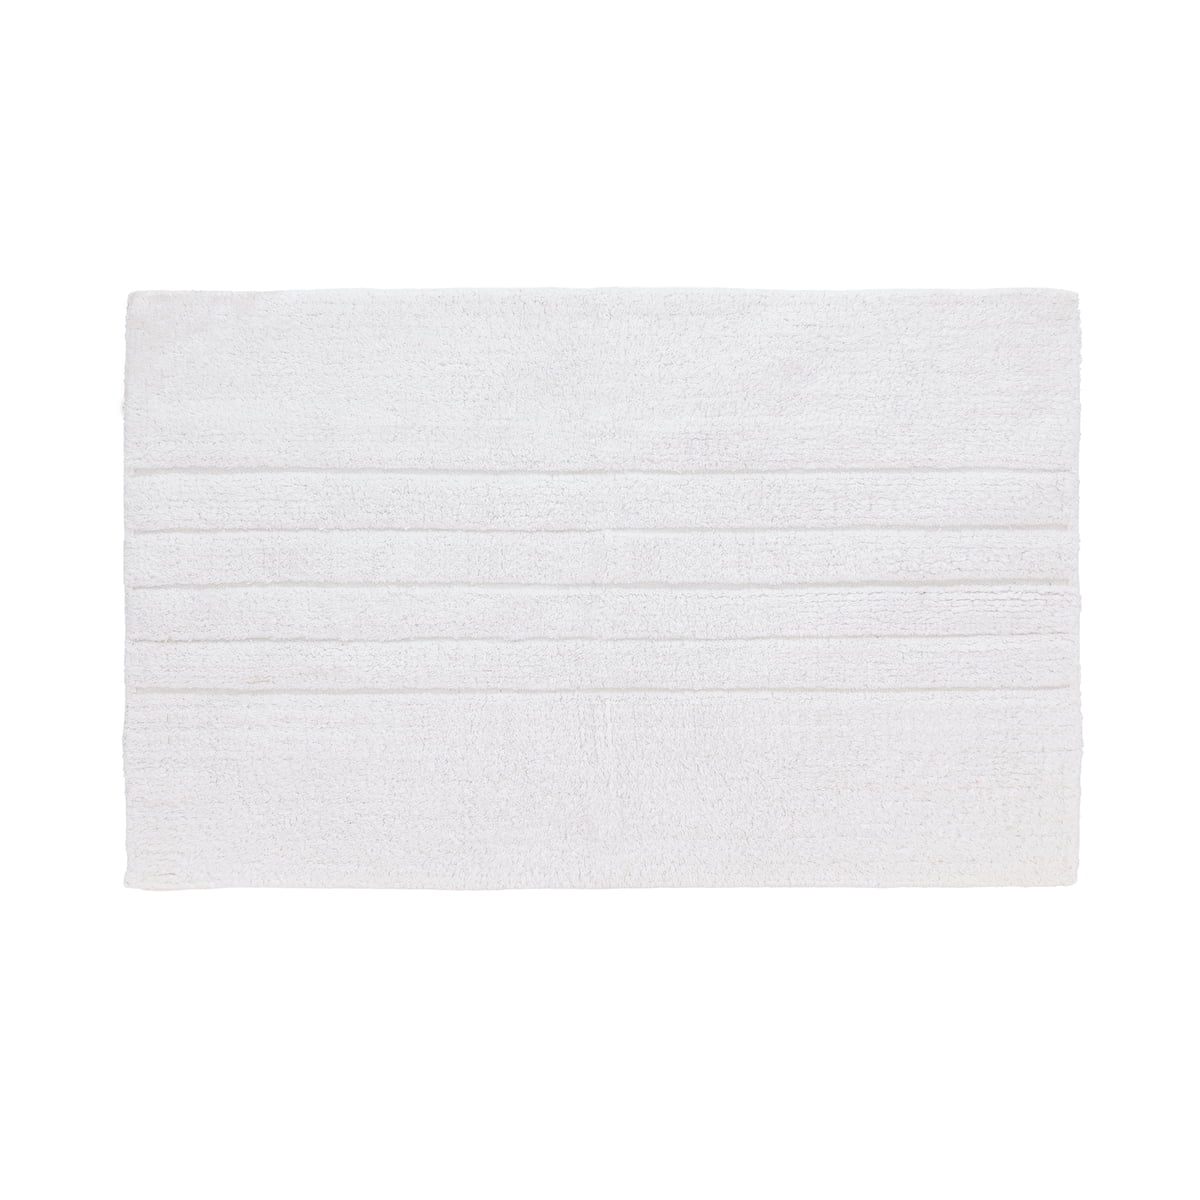 södahl - soft tapis de bain 50 x 80 cm, blanc